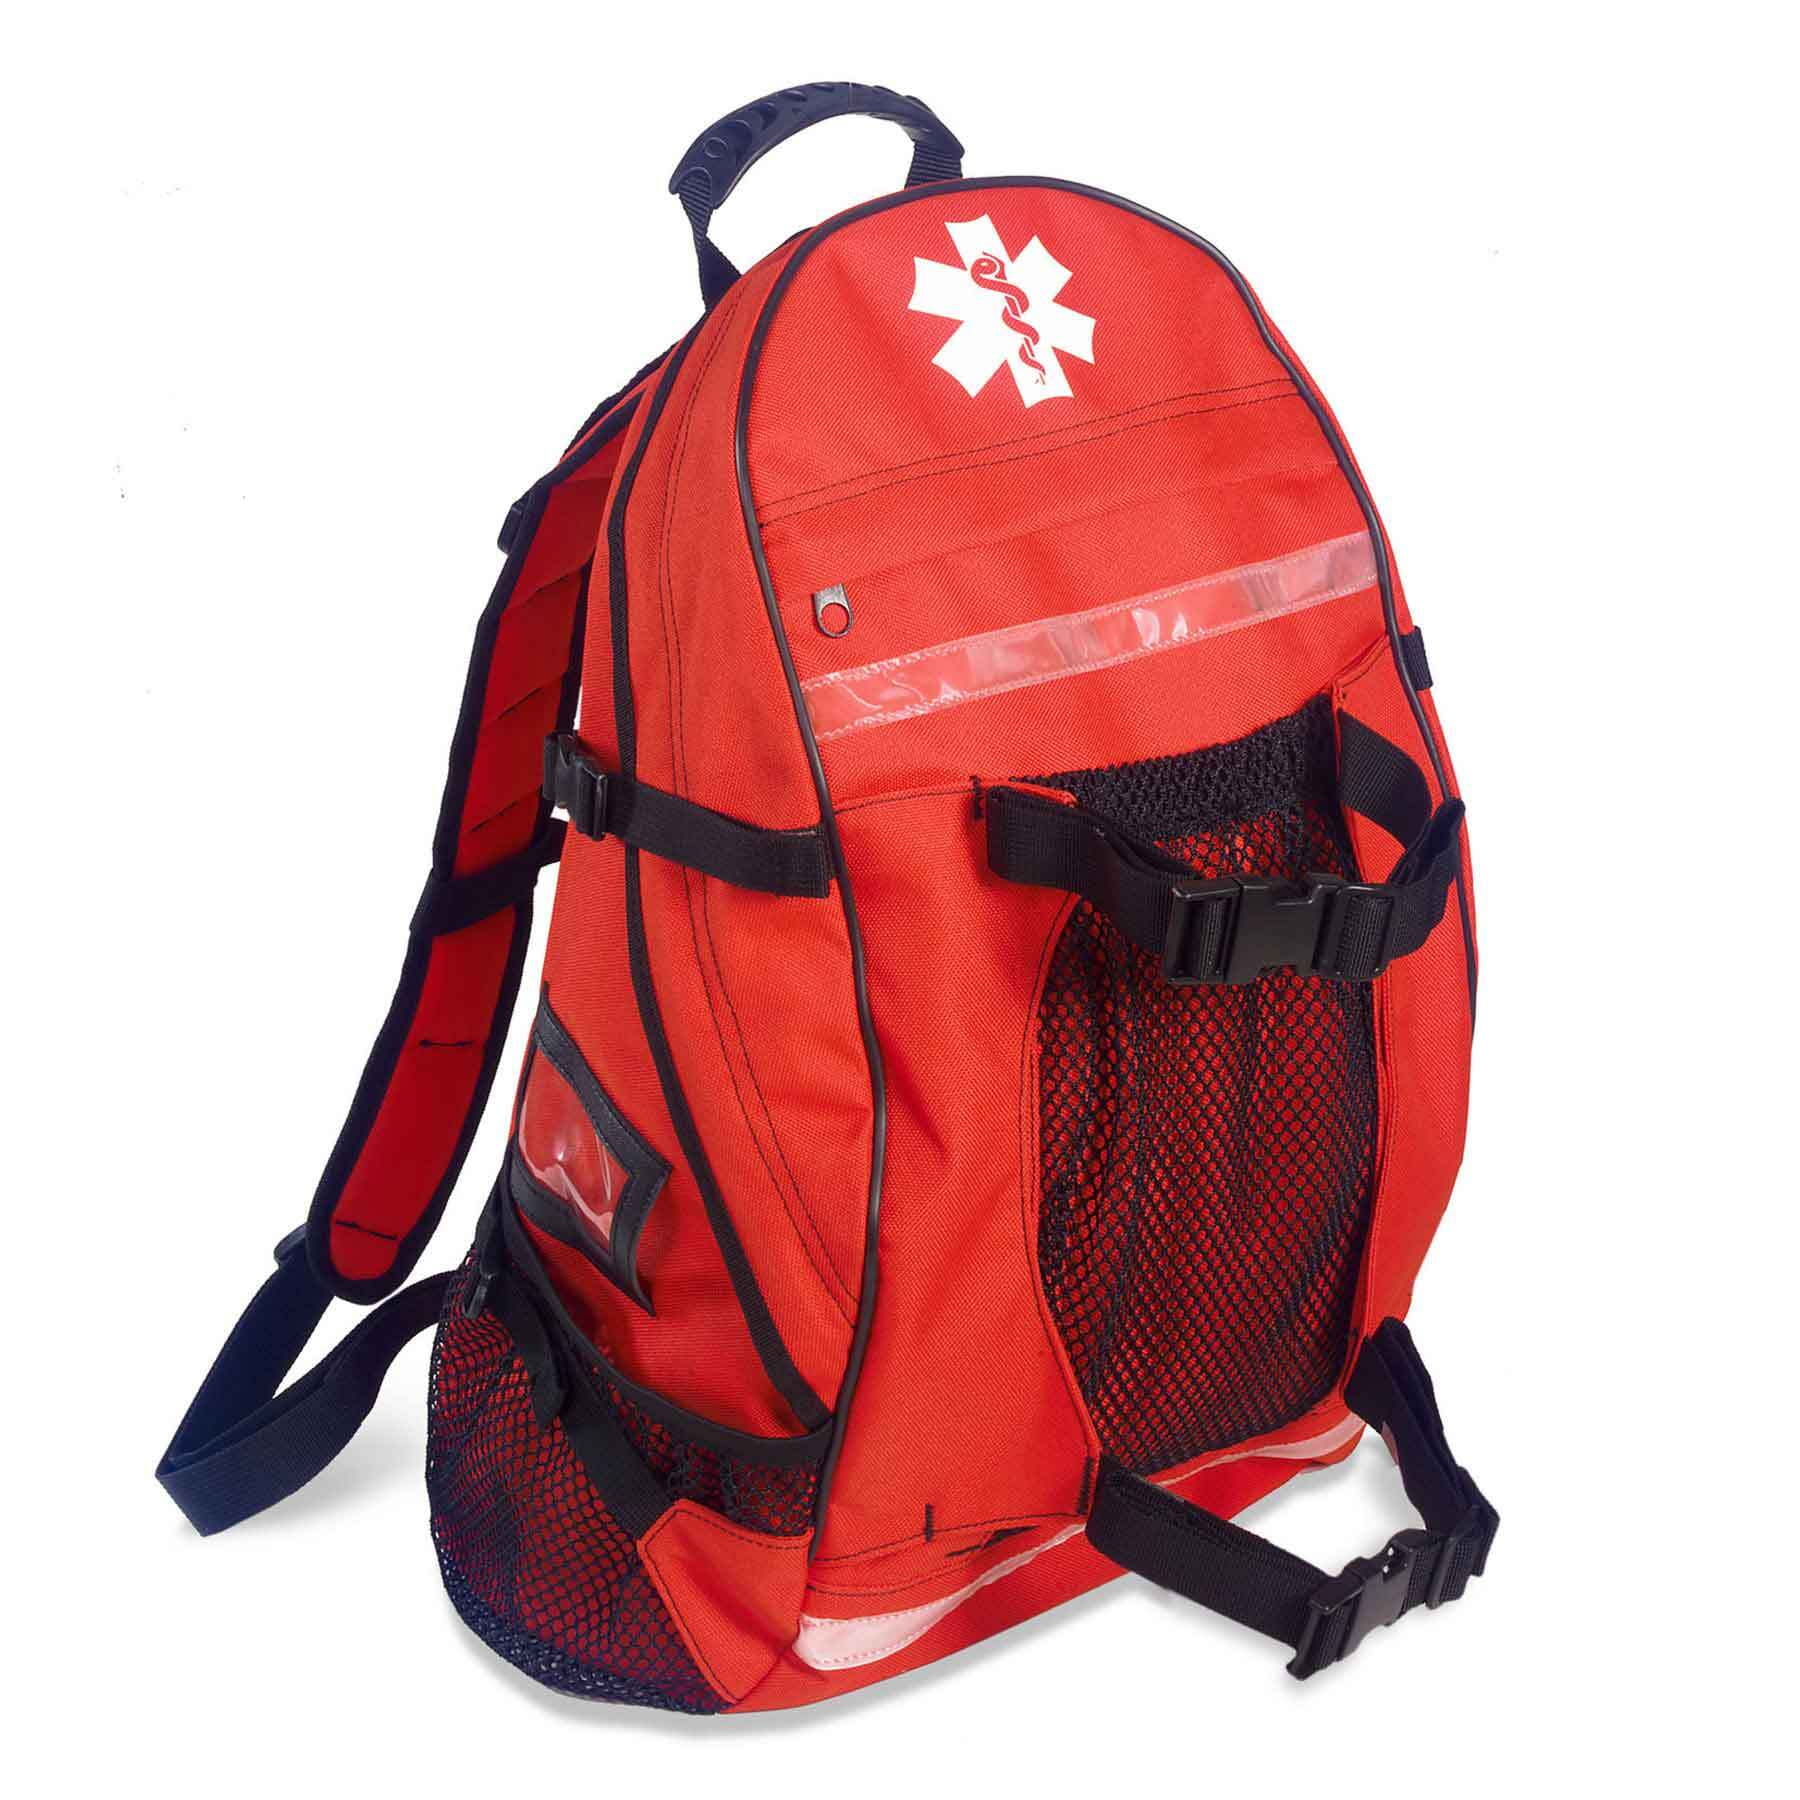 Details about   Ergodyne Arsenal 5243 Backpack Trauma Bag 